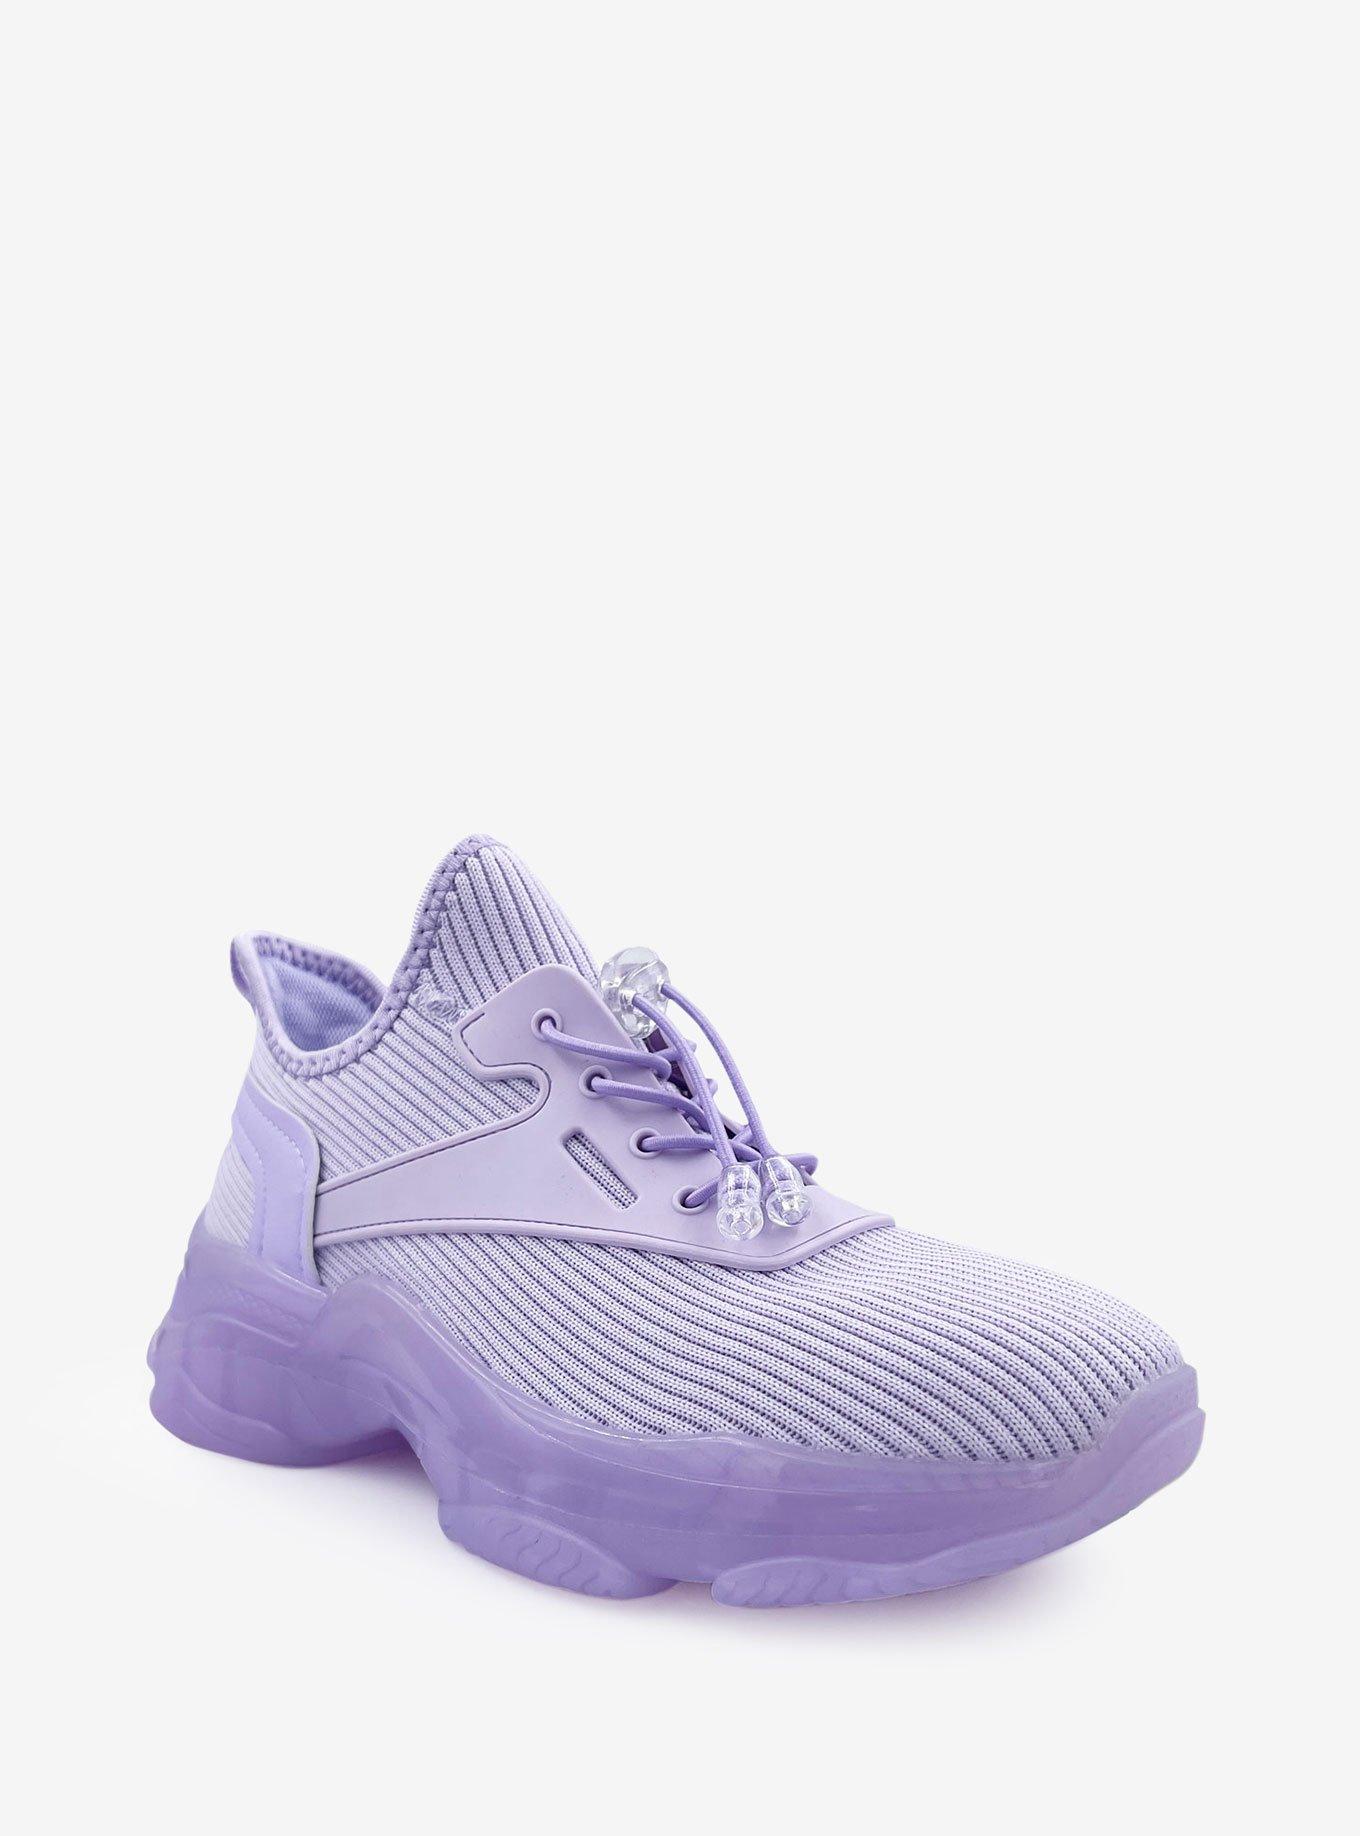 Sloan Knit Upper Sneaker with Chunky Bottom Purple, PURPLE, hi-res